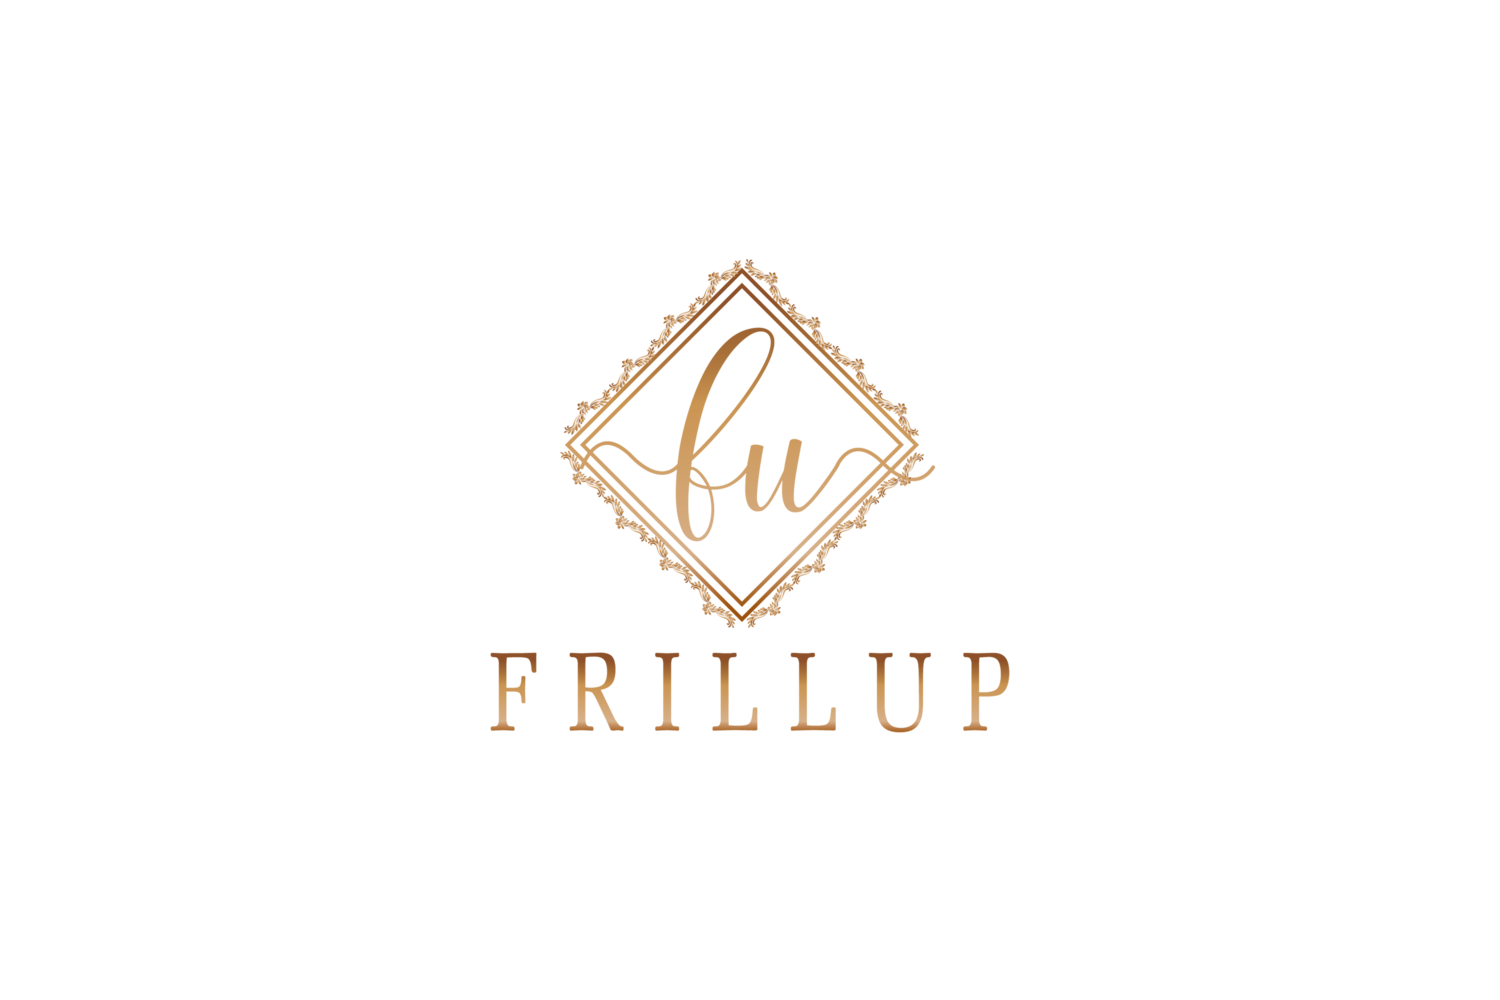 FrillUp